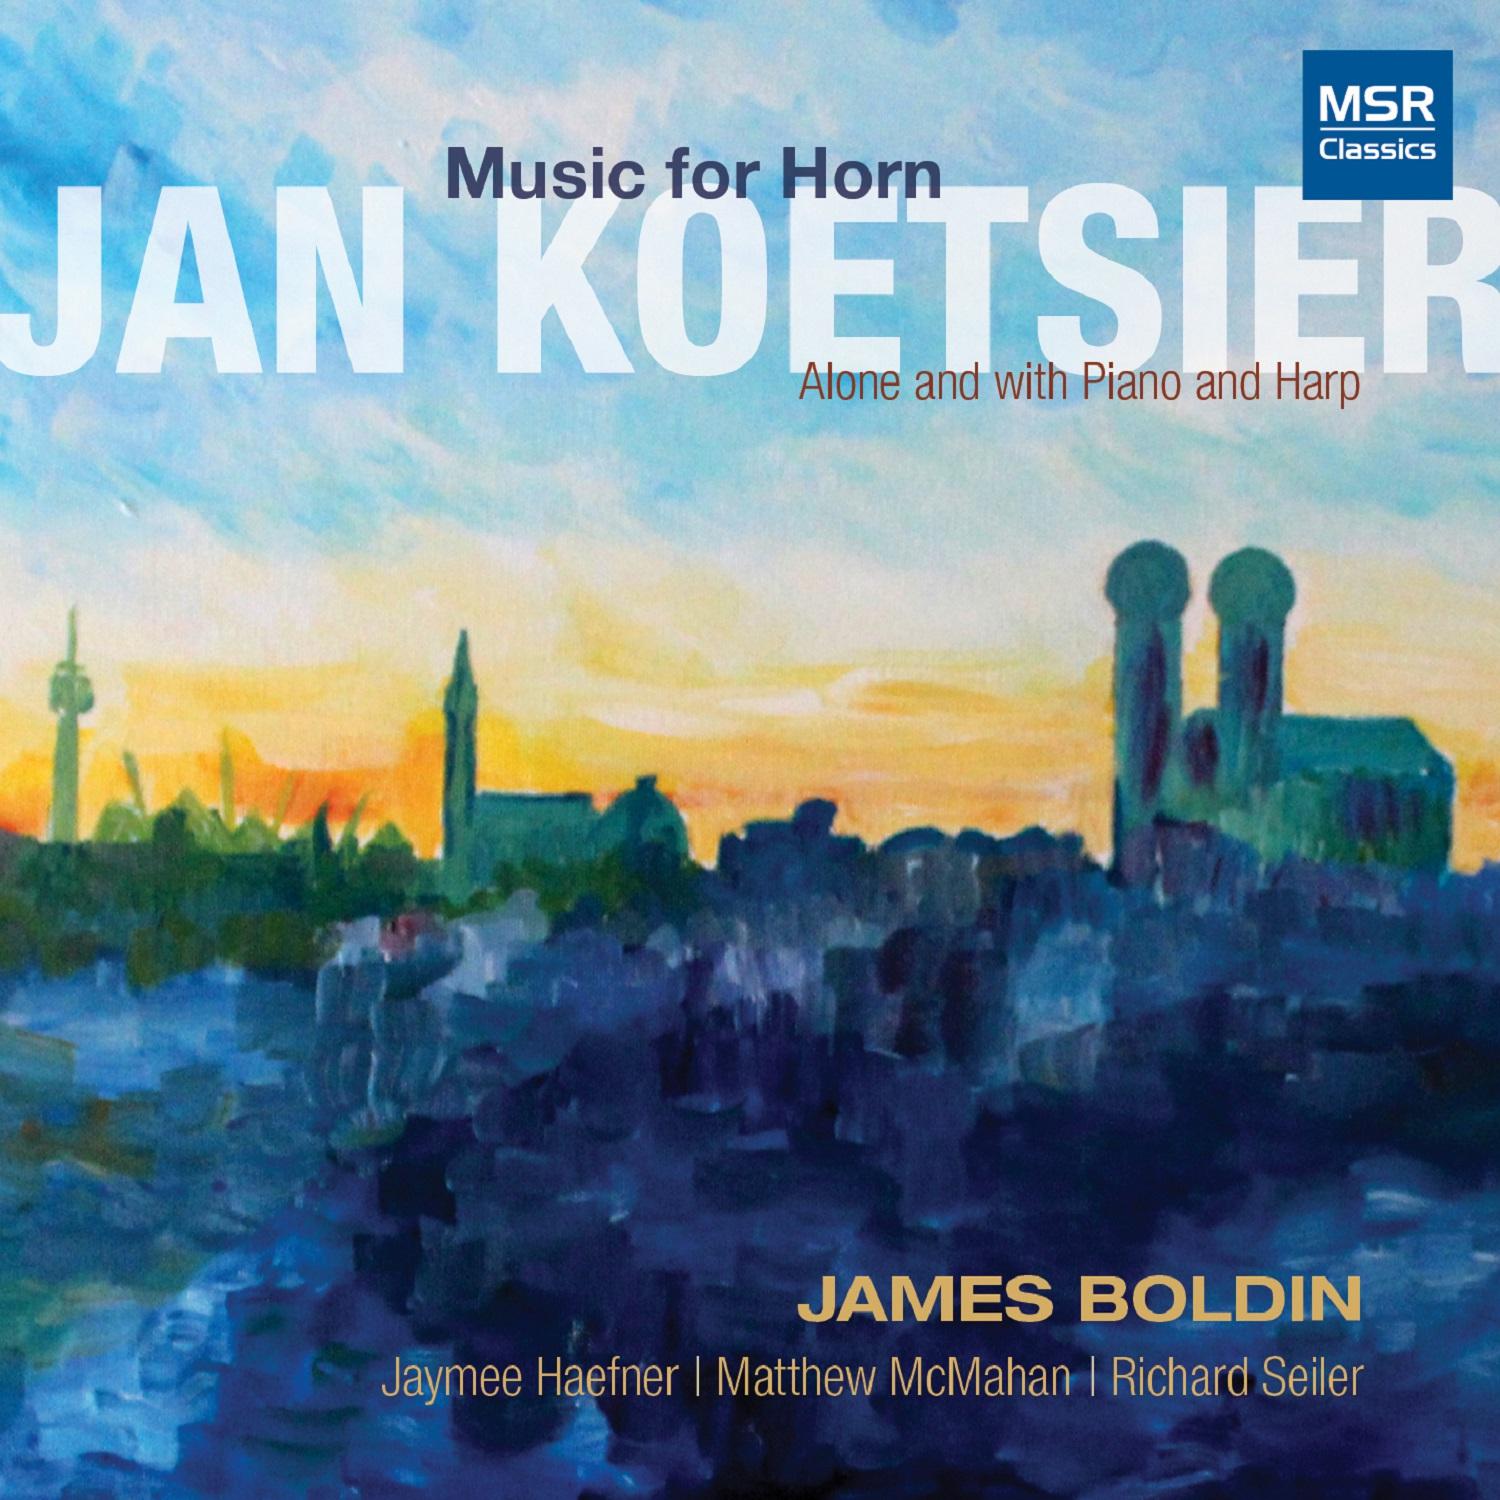 James Boldin - Scherzo Brillante for Horn and Piano, Op. 96